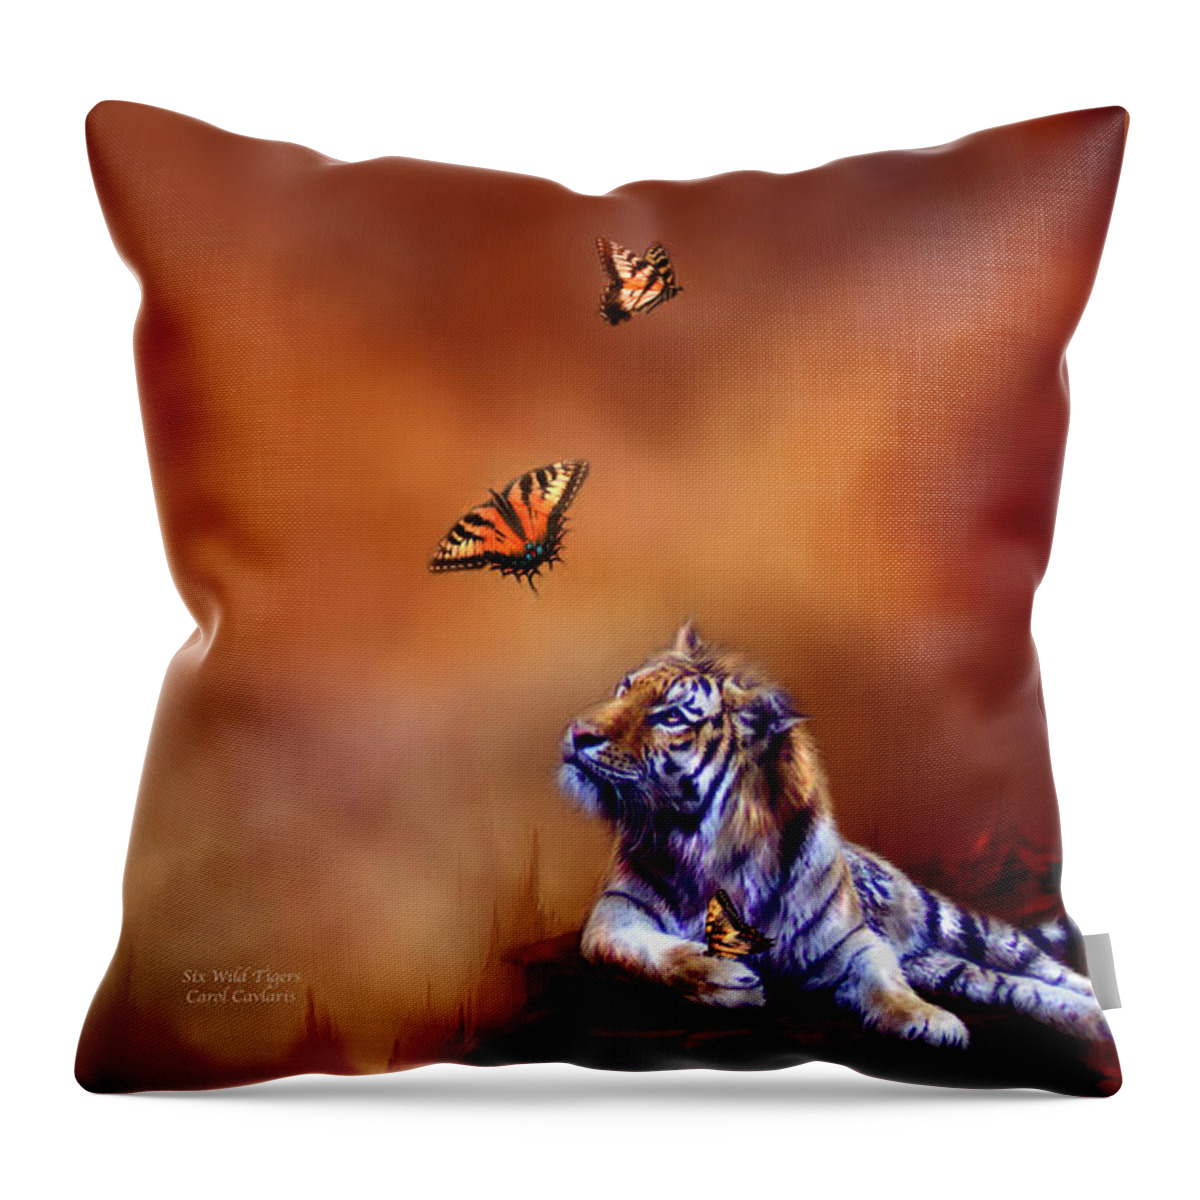 Carol Cavalaris Throw Pillow featuring the mixed media Six Wild Tigers by Carol Cavalaris